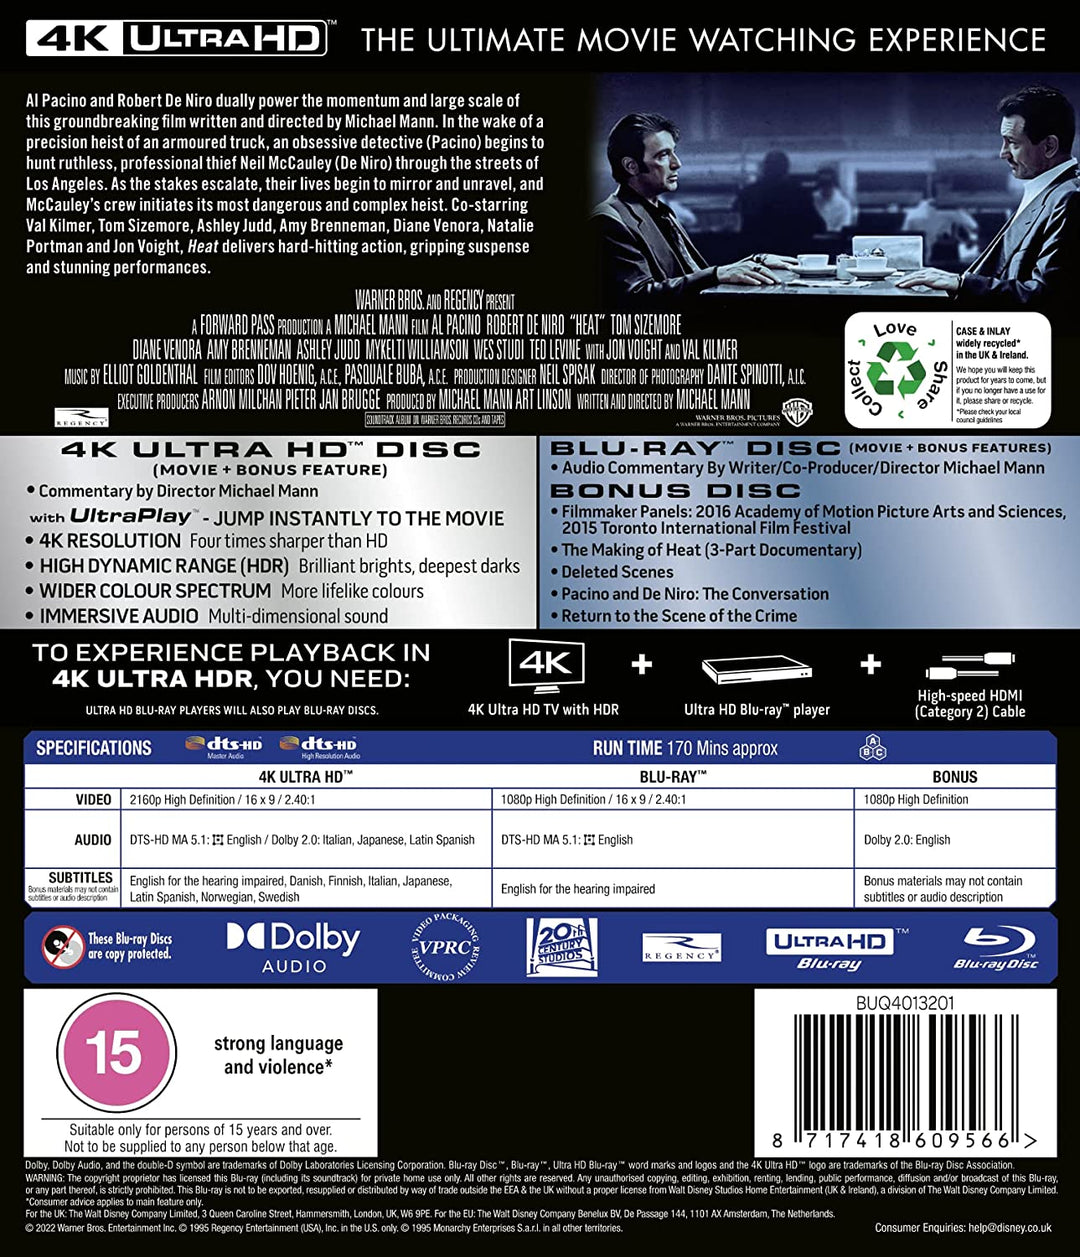 Heat 4K Ultra-HD – Thriller [Blu-ray] [Region Free]